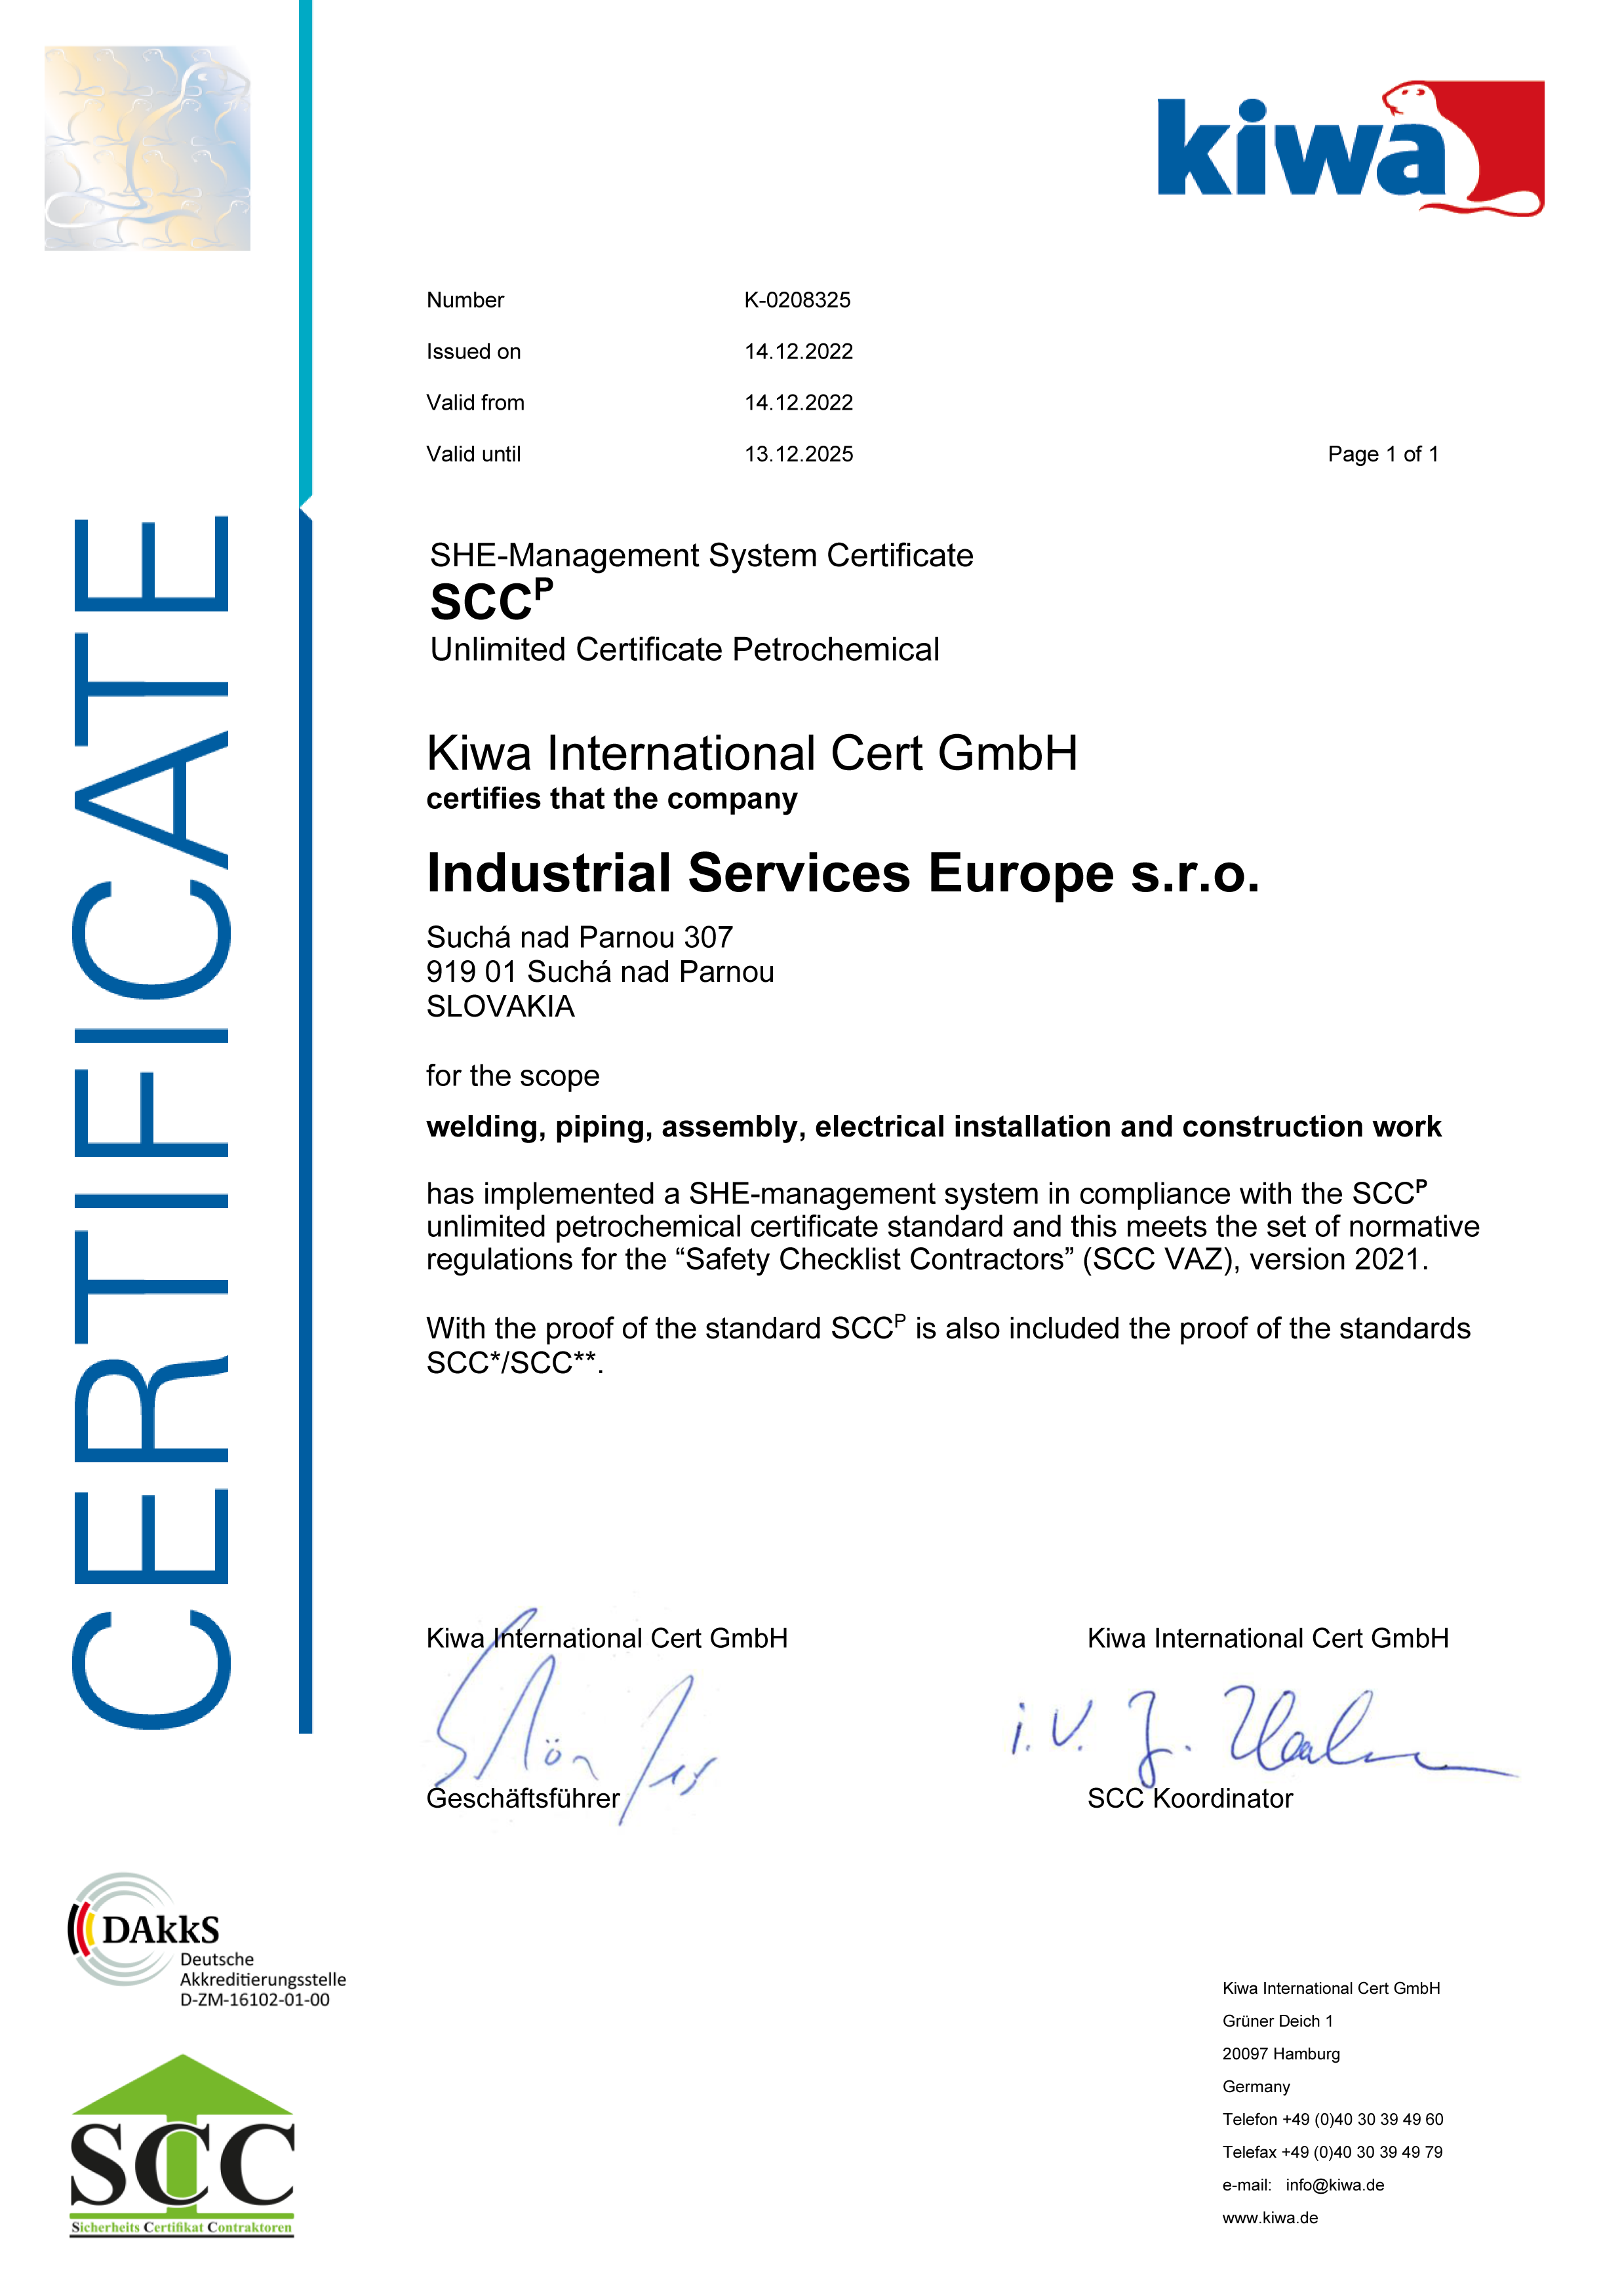 Certificate for SCCP (Société de Construction de Canalisation et de Ponts) certification. Official document featuring the SCCP certification information, indicating high standards in construction and infrastructure.